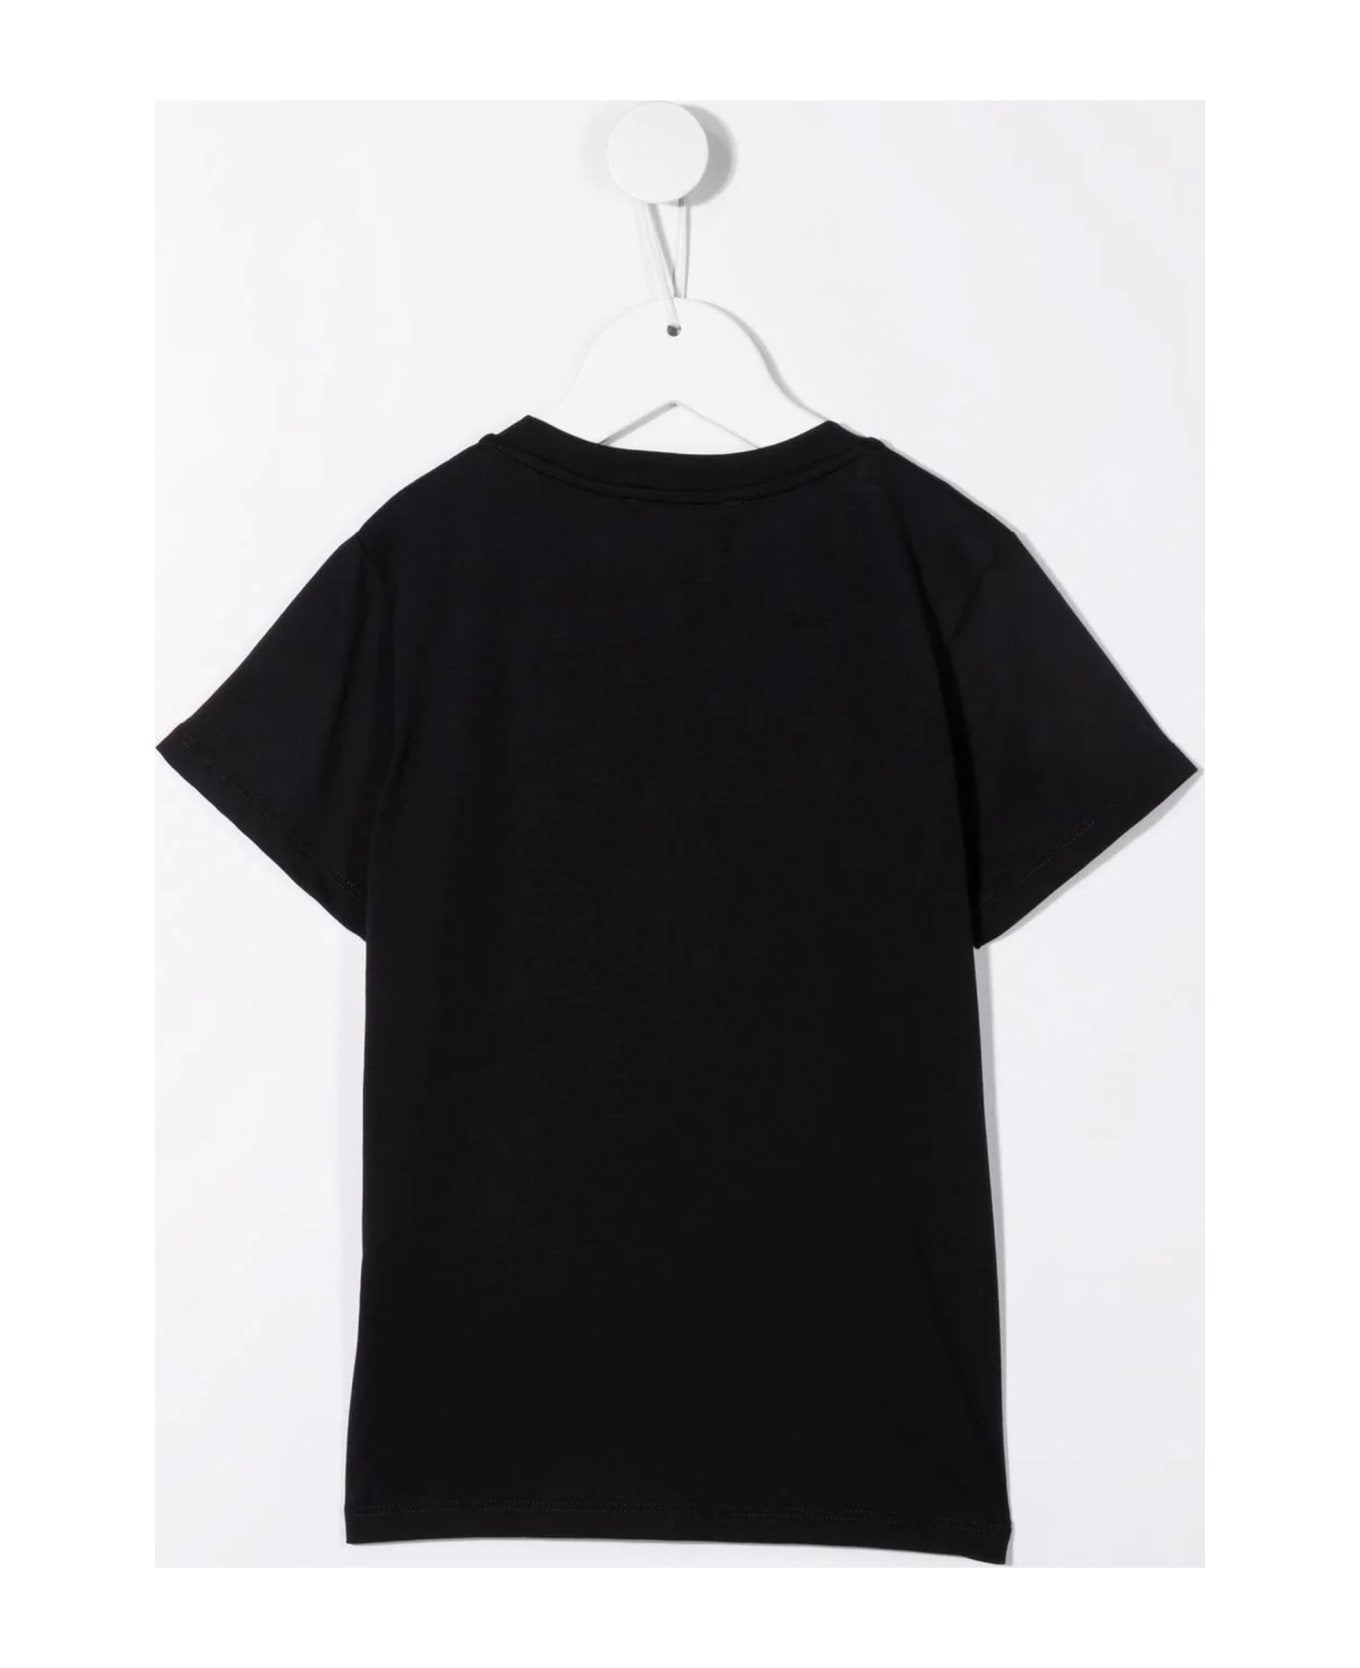 Emporio Armani T-shirts And Polos Black - Black Tシャツ＆ポロシャツ